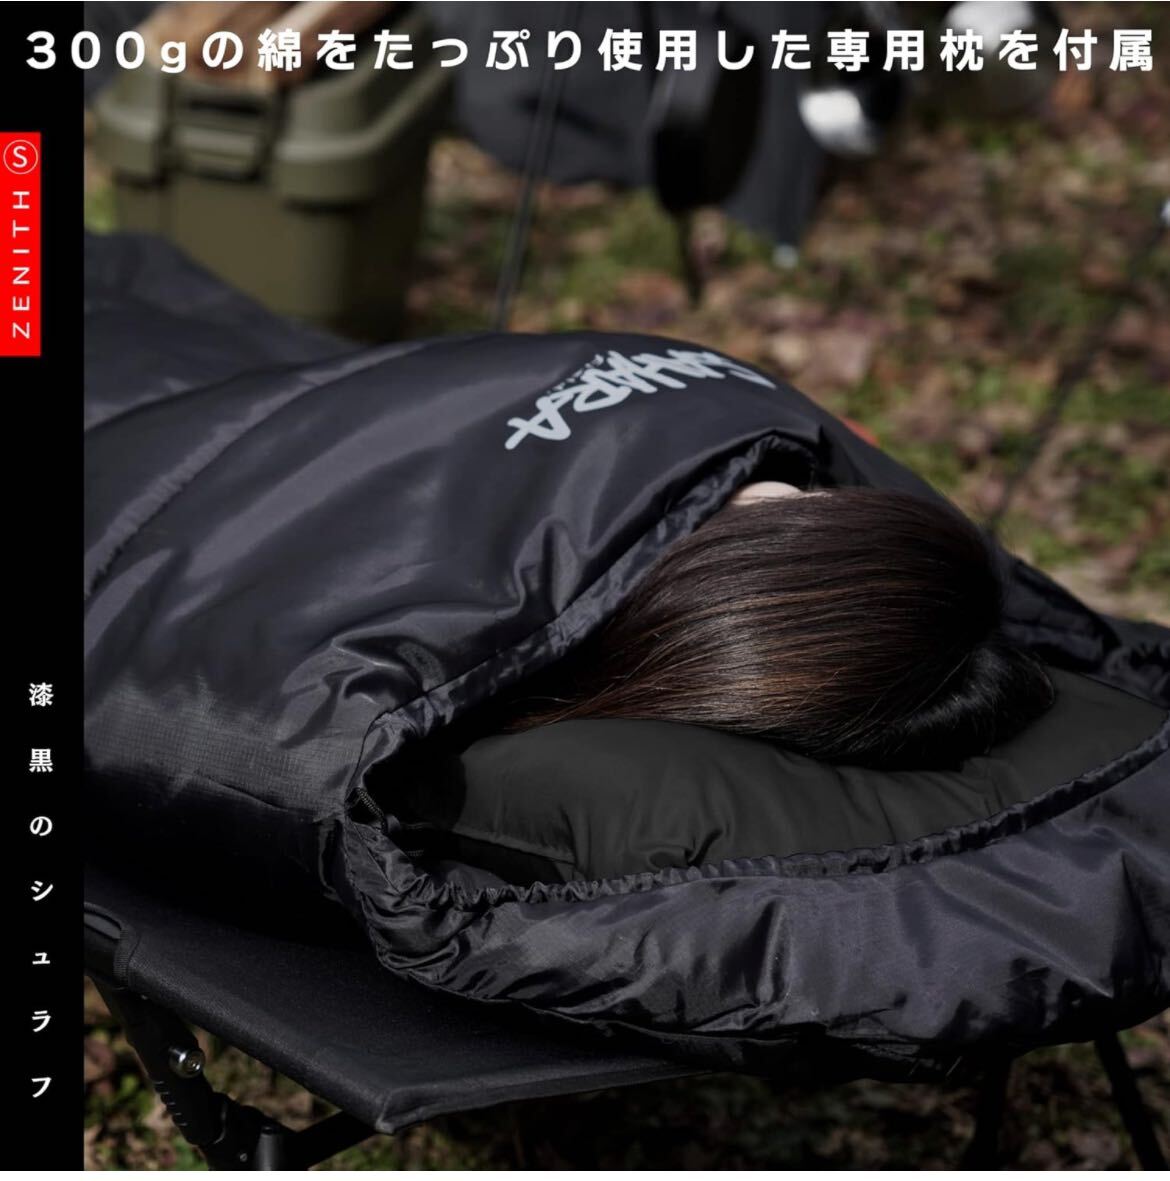 FieldSAHARA (フィールドサハラ) 寝袋 シュラフ 冬用 人工ダウン ワイドサイズ 封筒型 限界温度-15℃ zw1500 ブラックの画像4